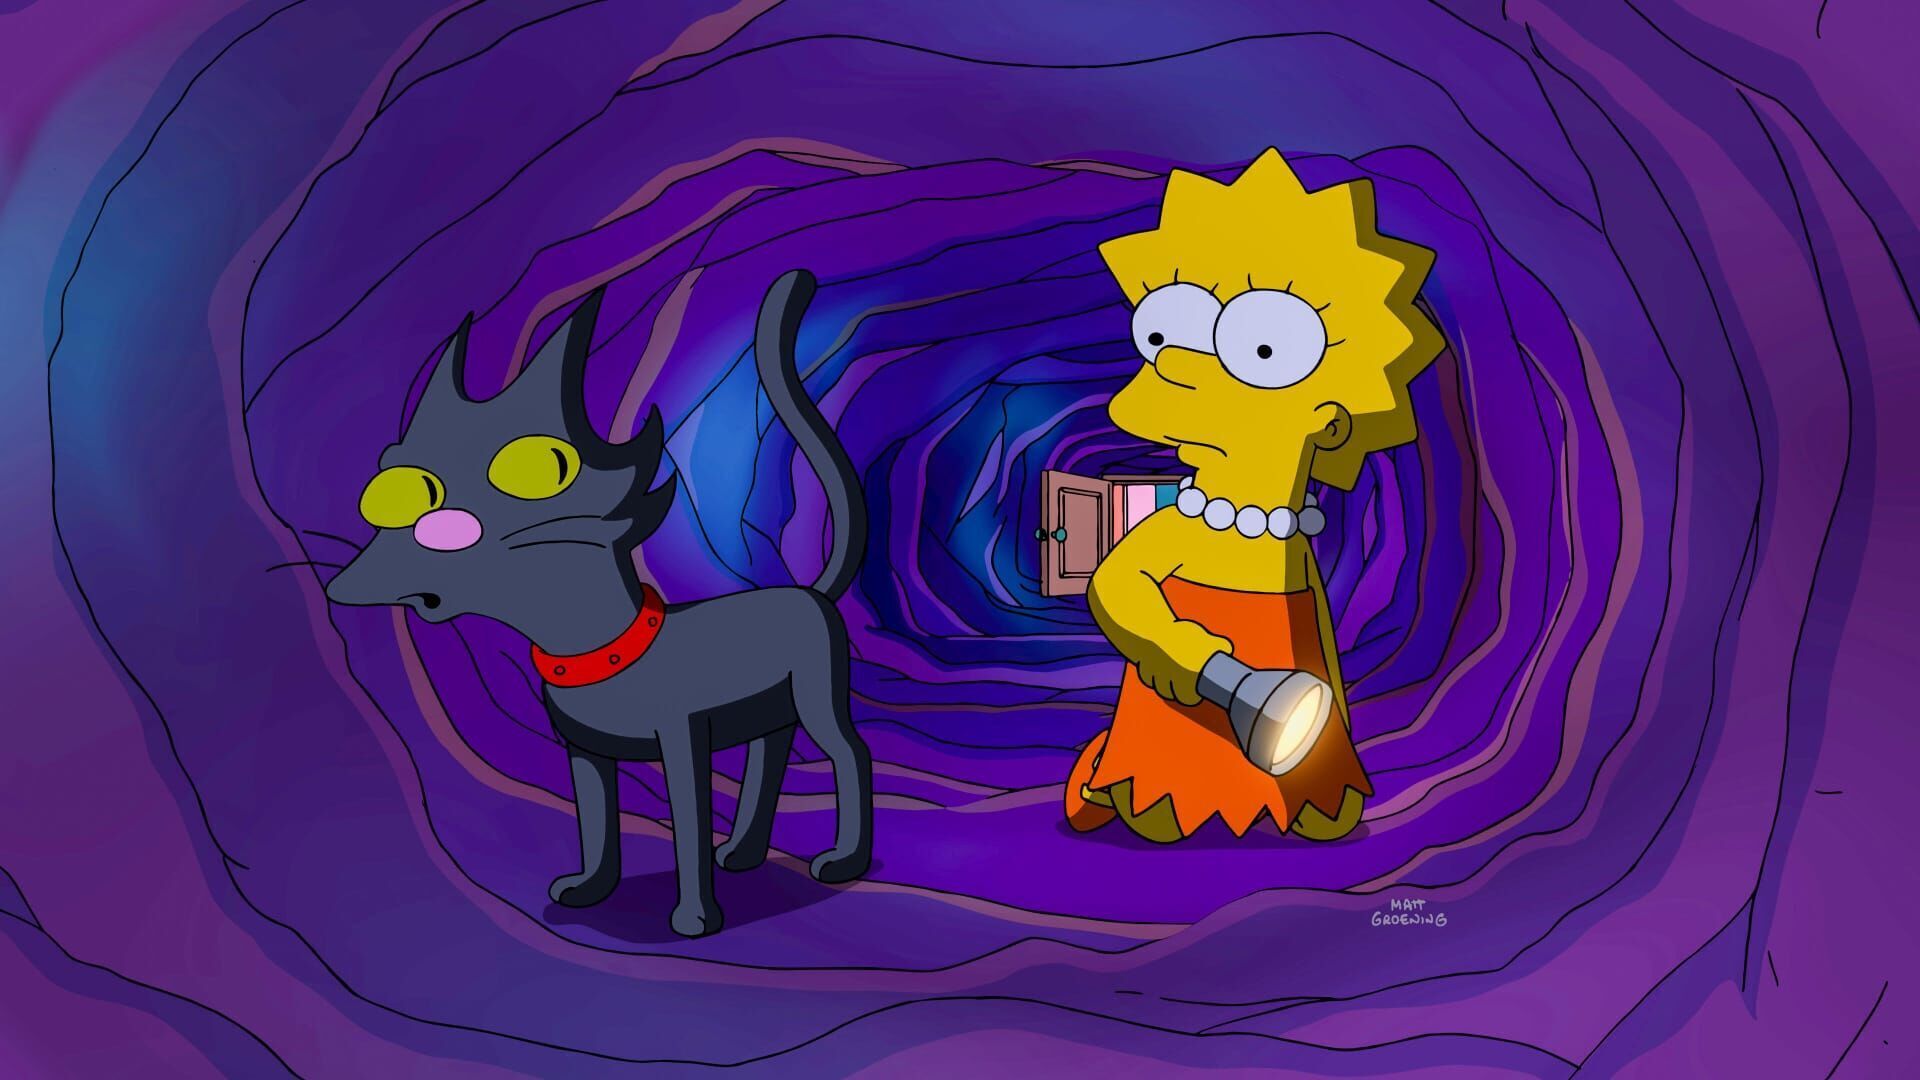 The Simpsons - Treehouse of Horror XXVIII